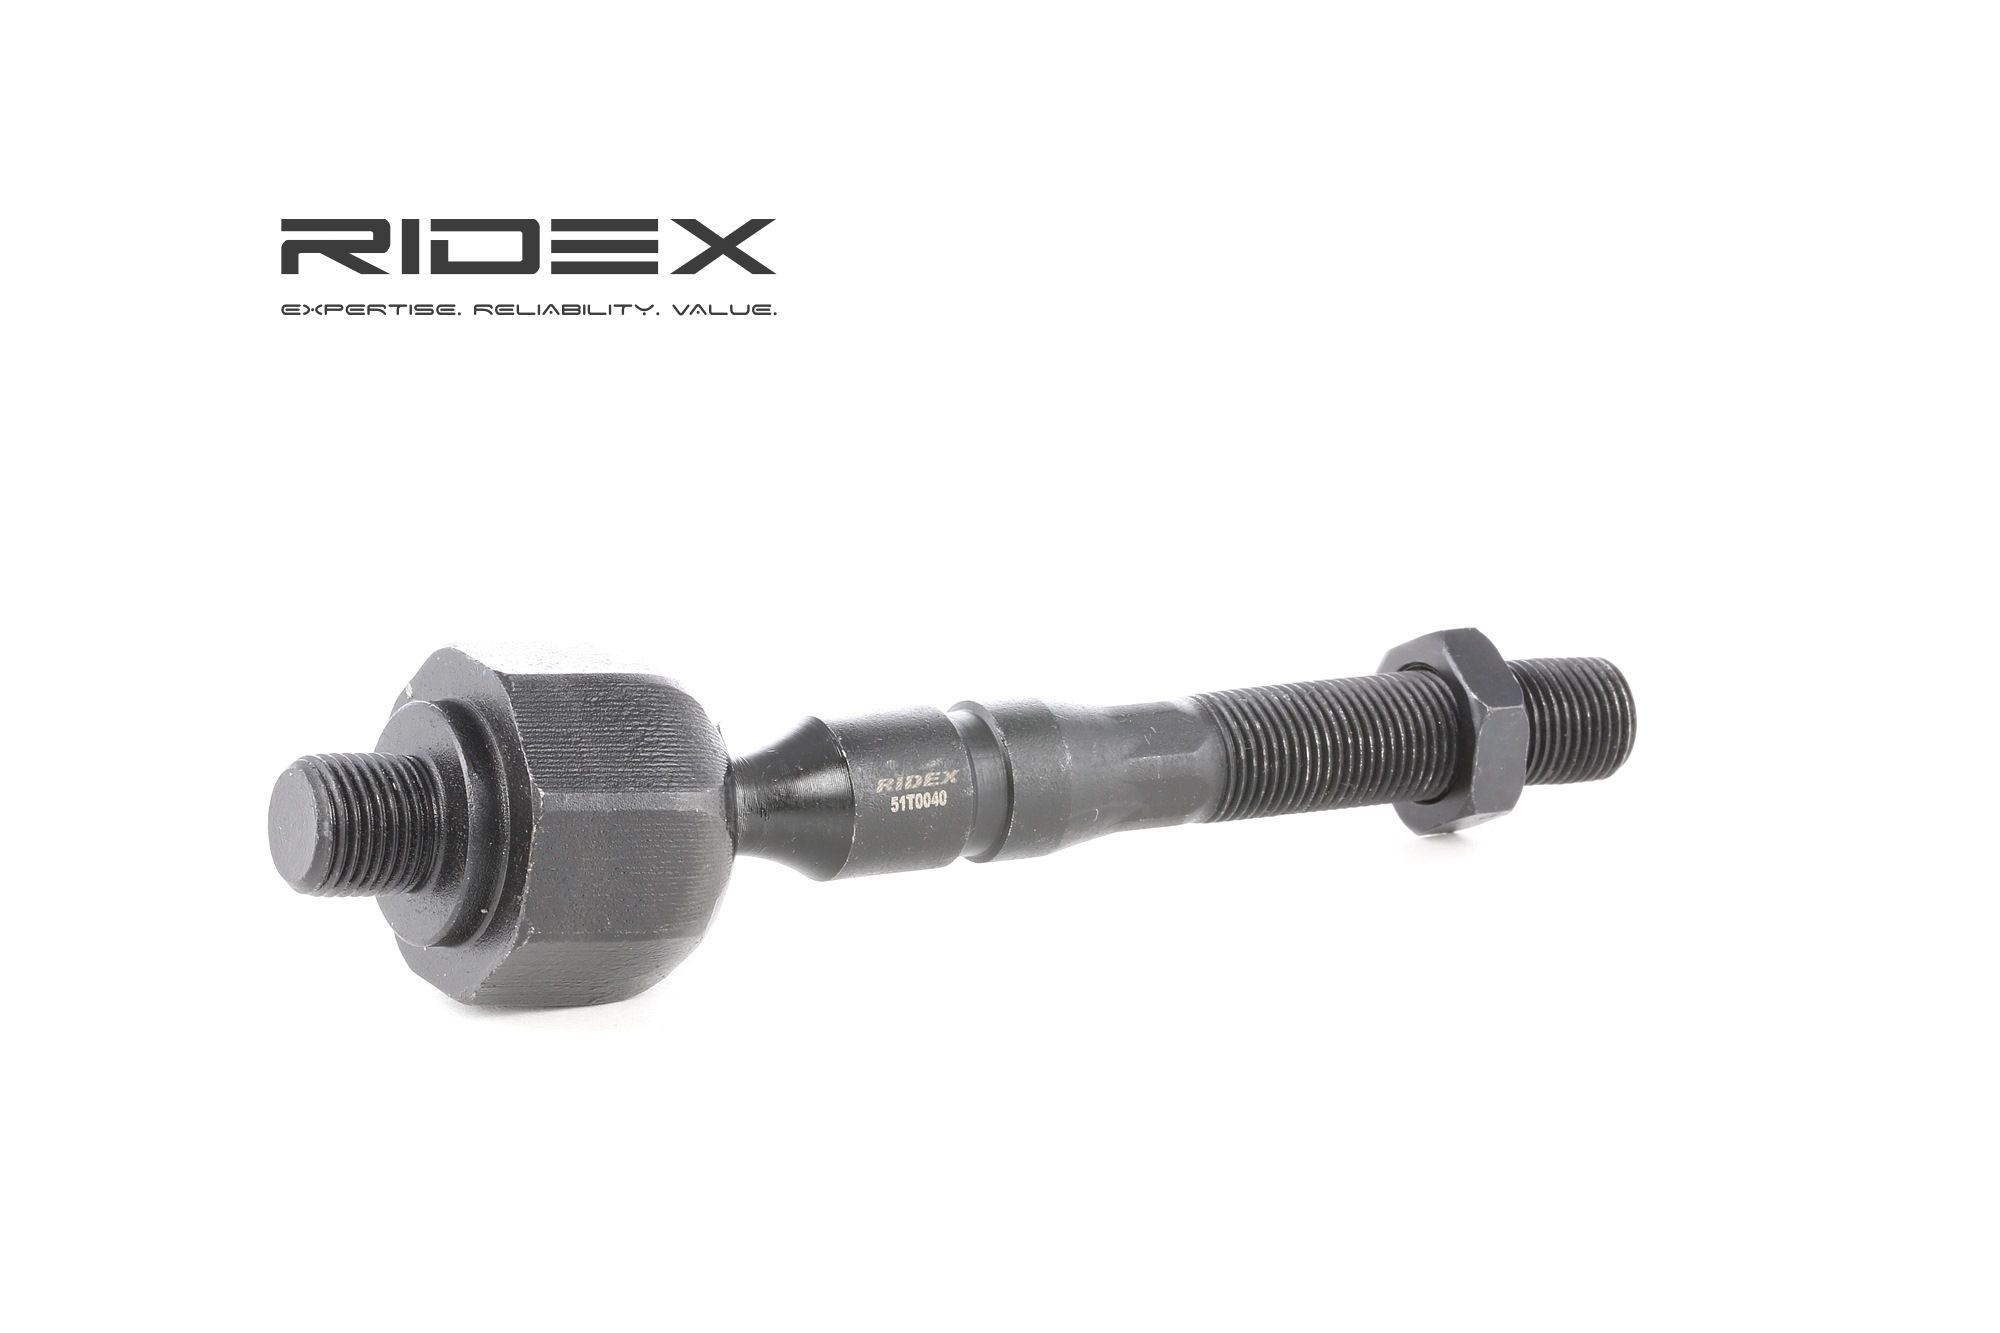 RIDEX Rotule Axiale MERCEDES-BENZ 51T0040 1633380215,A1633380215